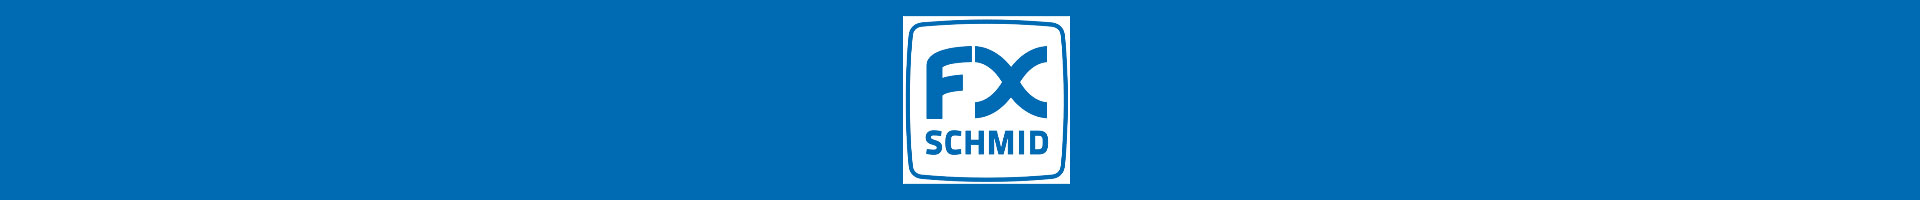 09_2020_Header_FX-Schmid_mindtouch_1920x200.jpg